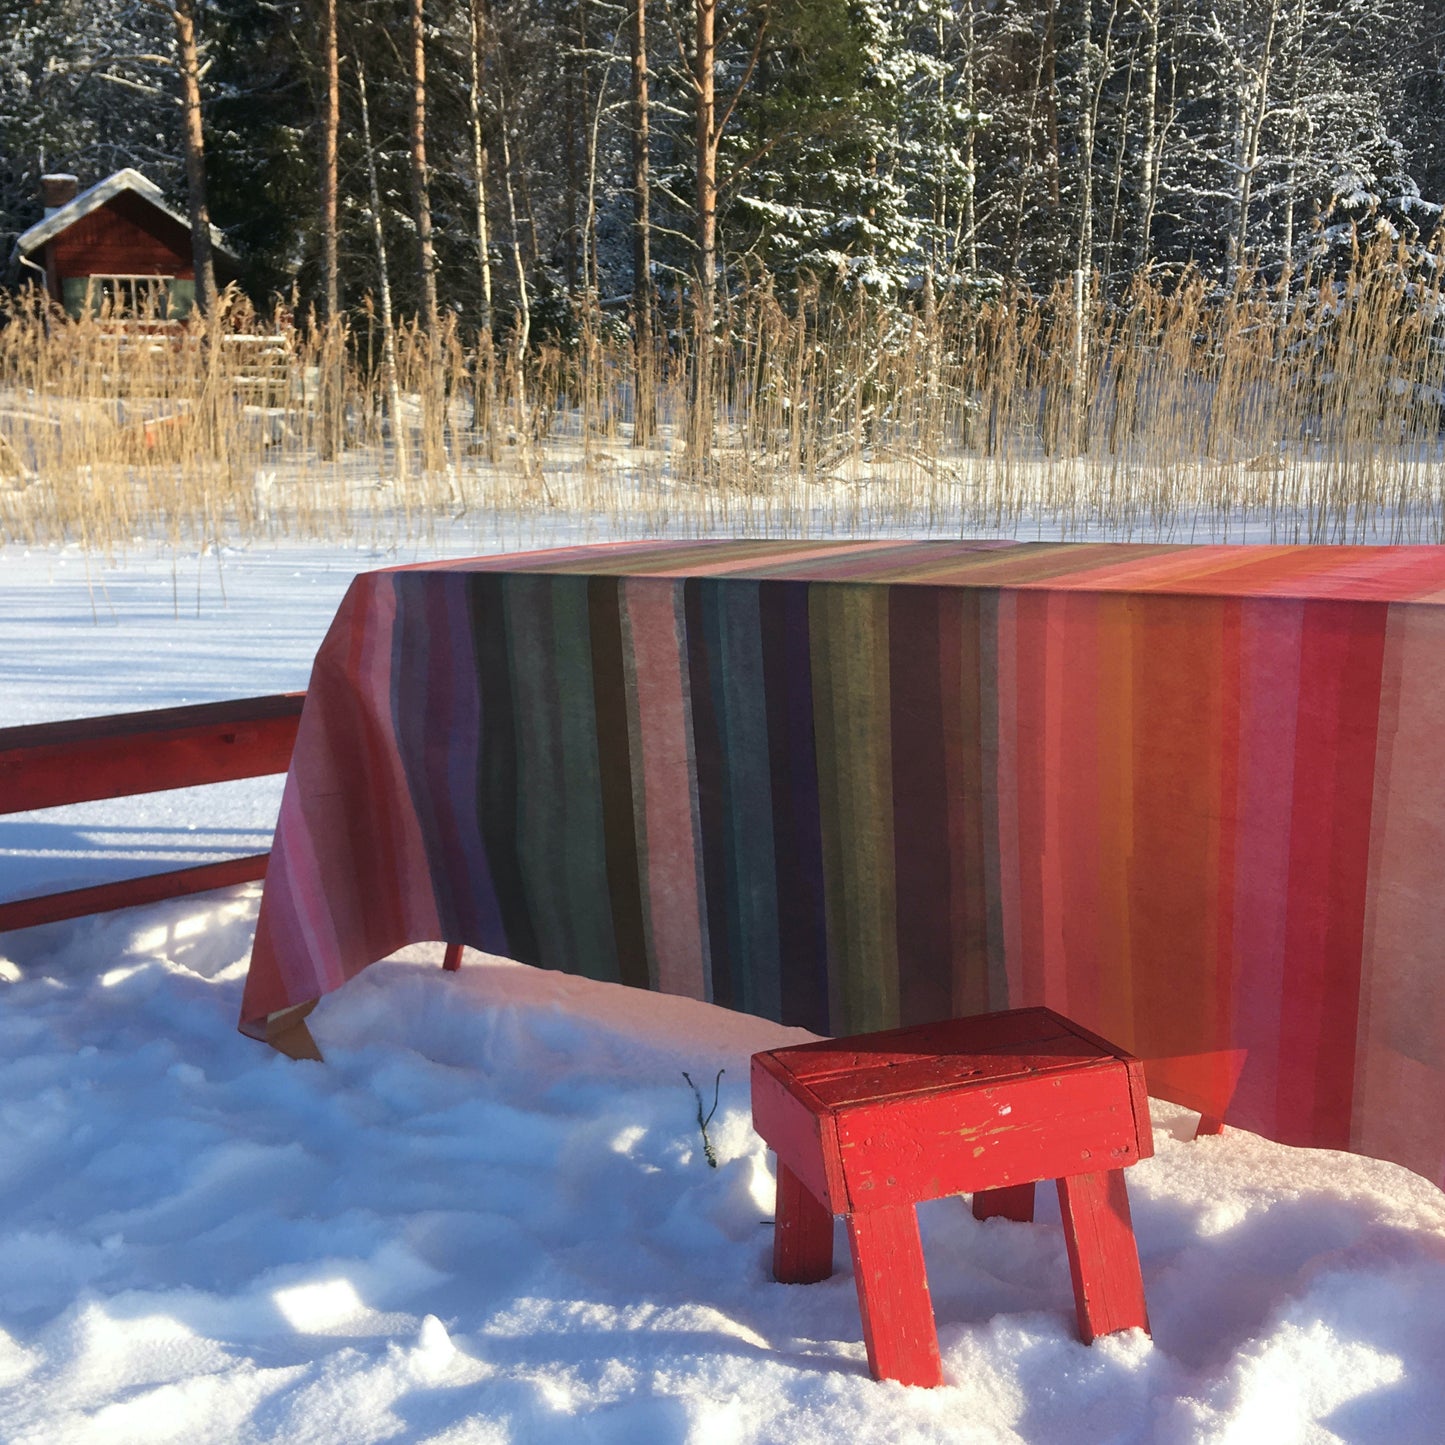 Finland, Maija Esko, 'Friend' Art Textile